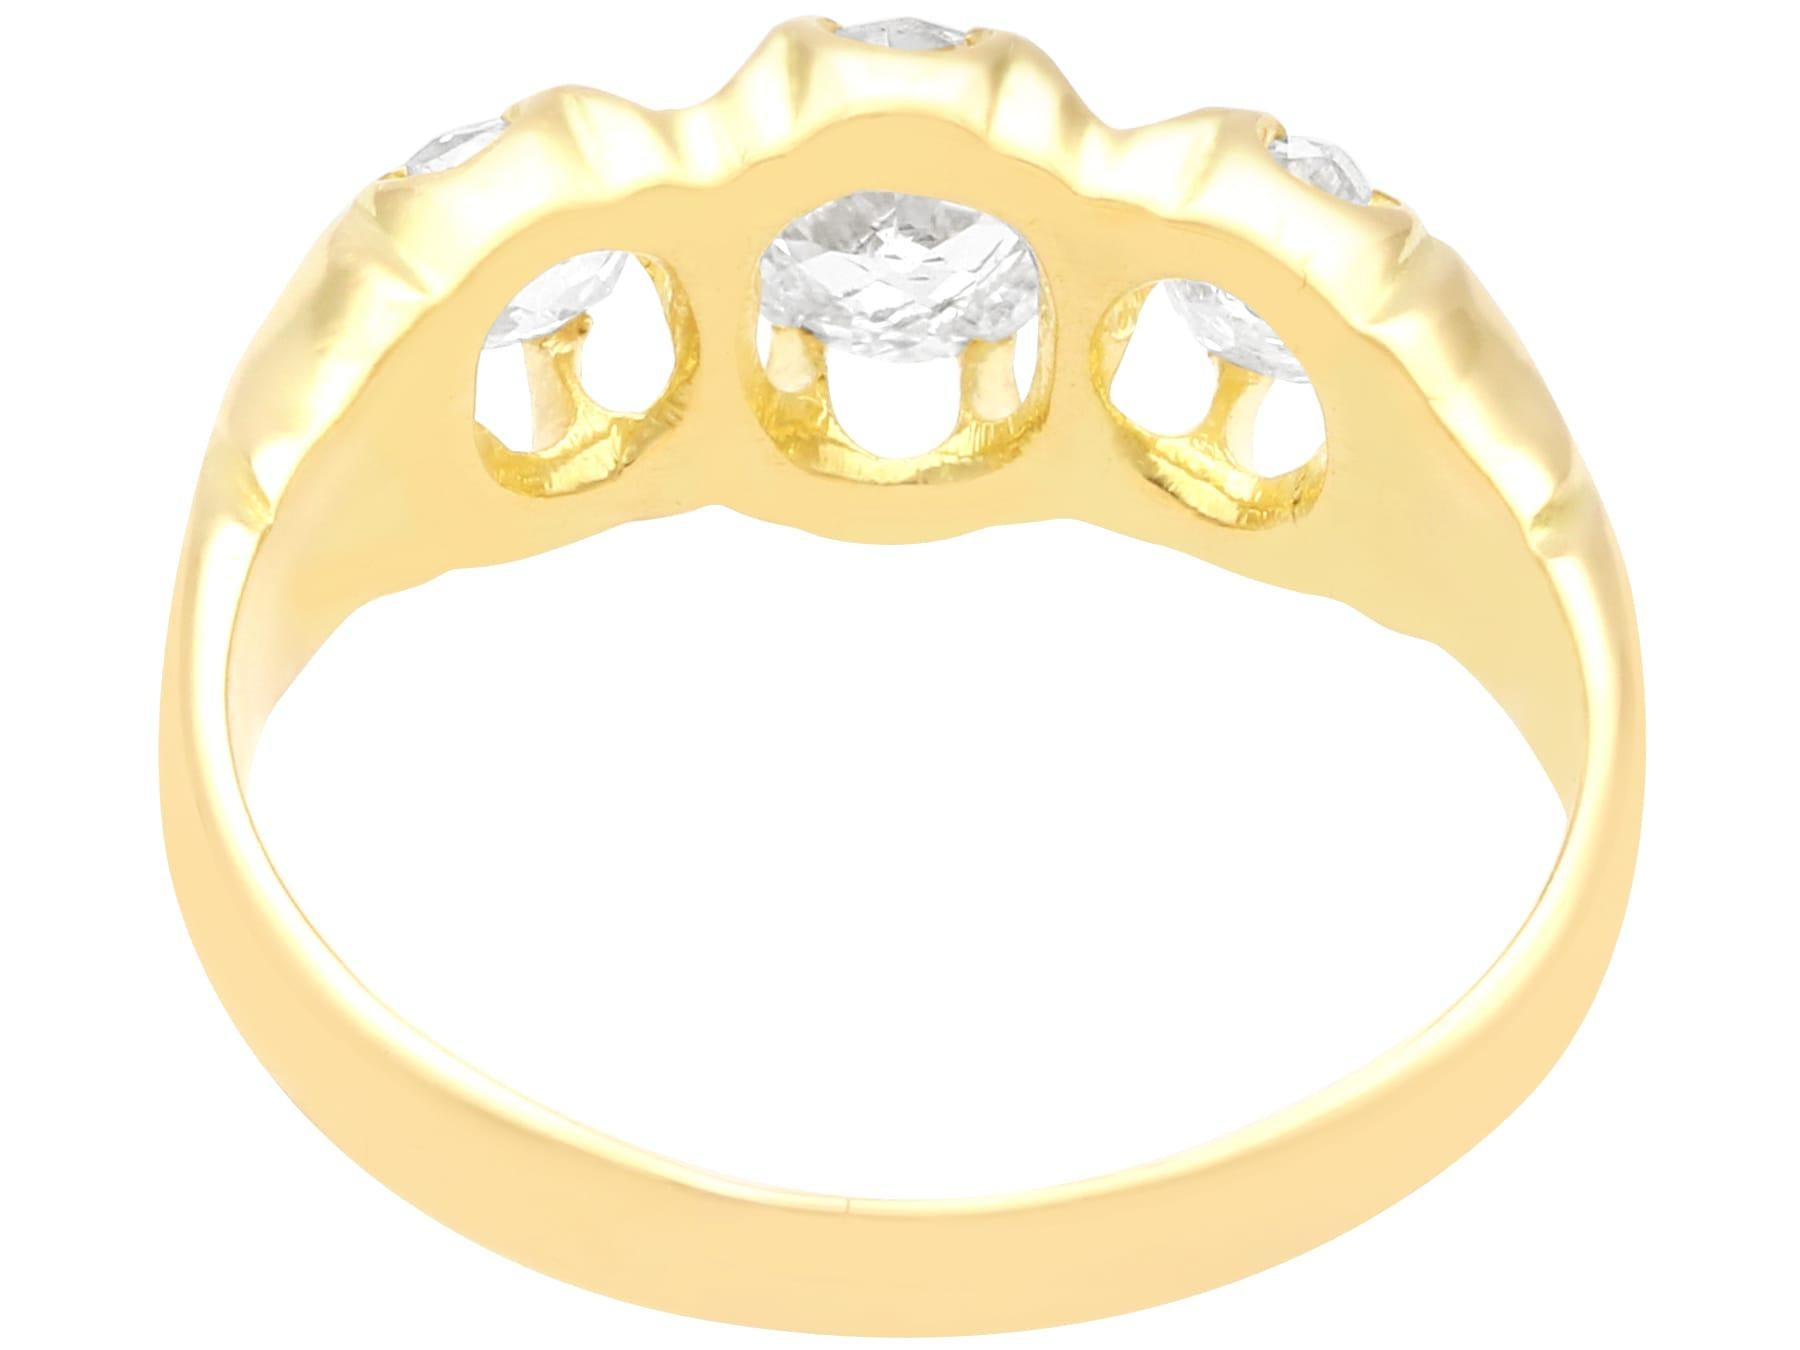 15k diamond ring